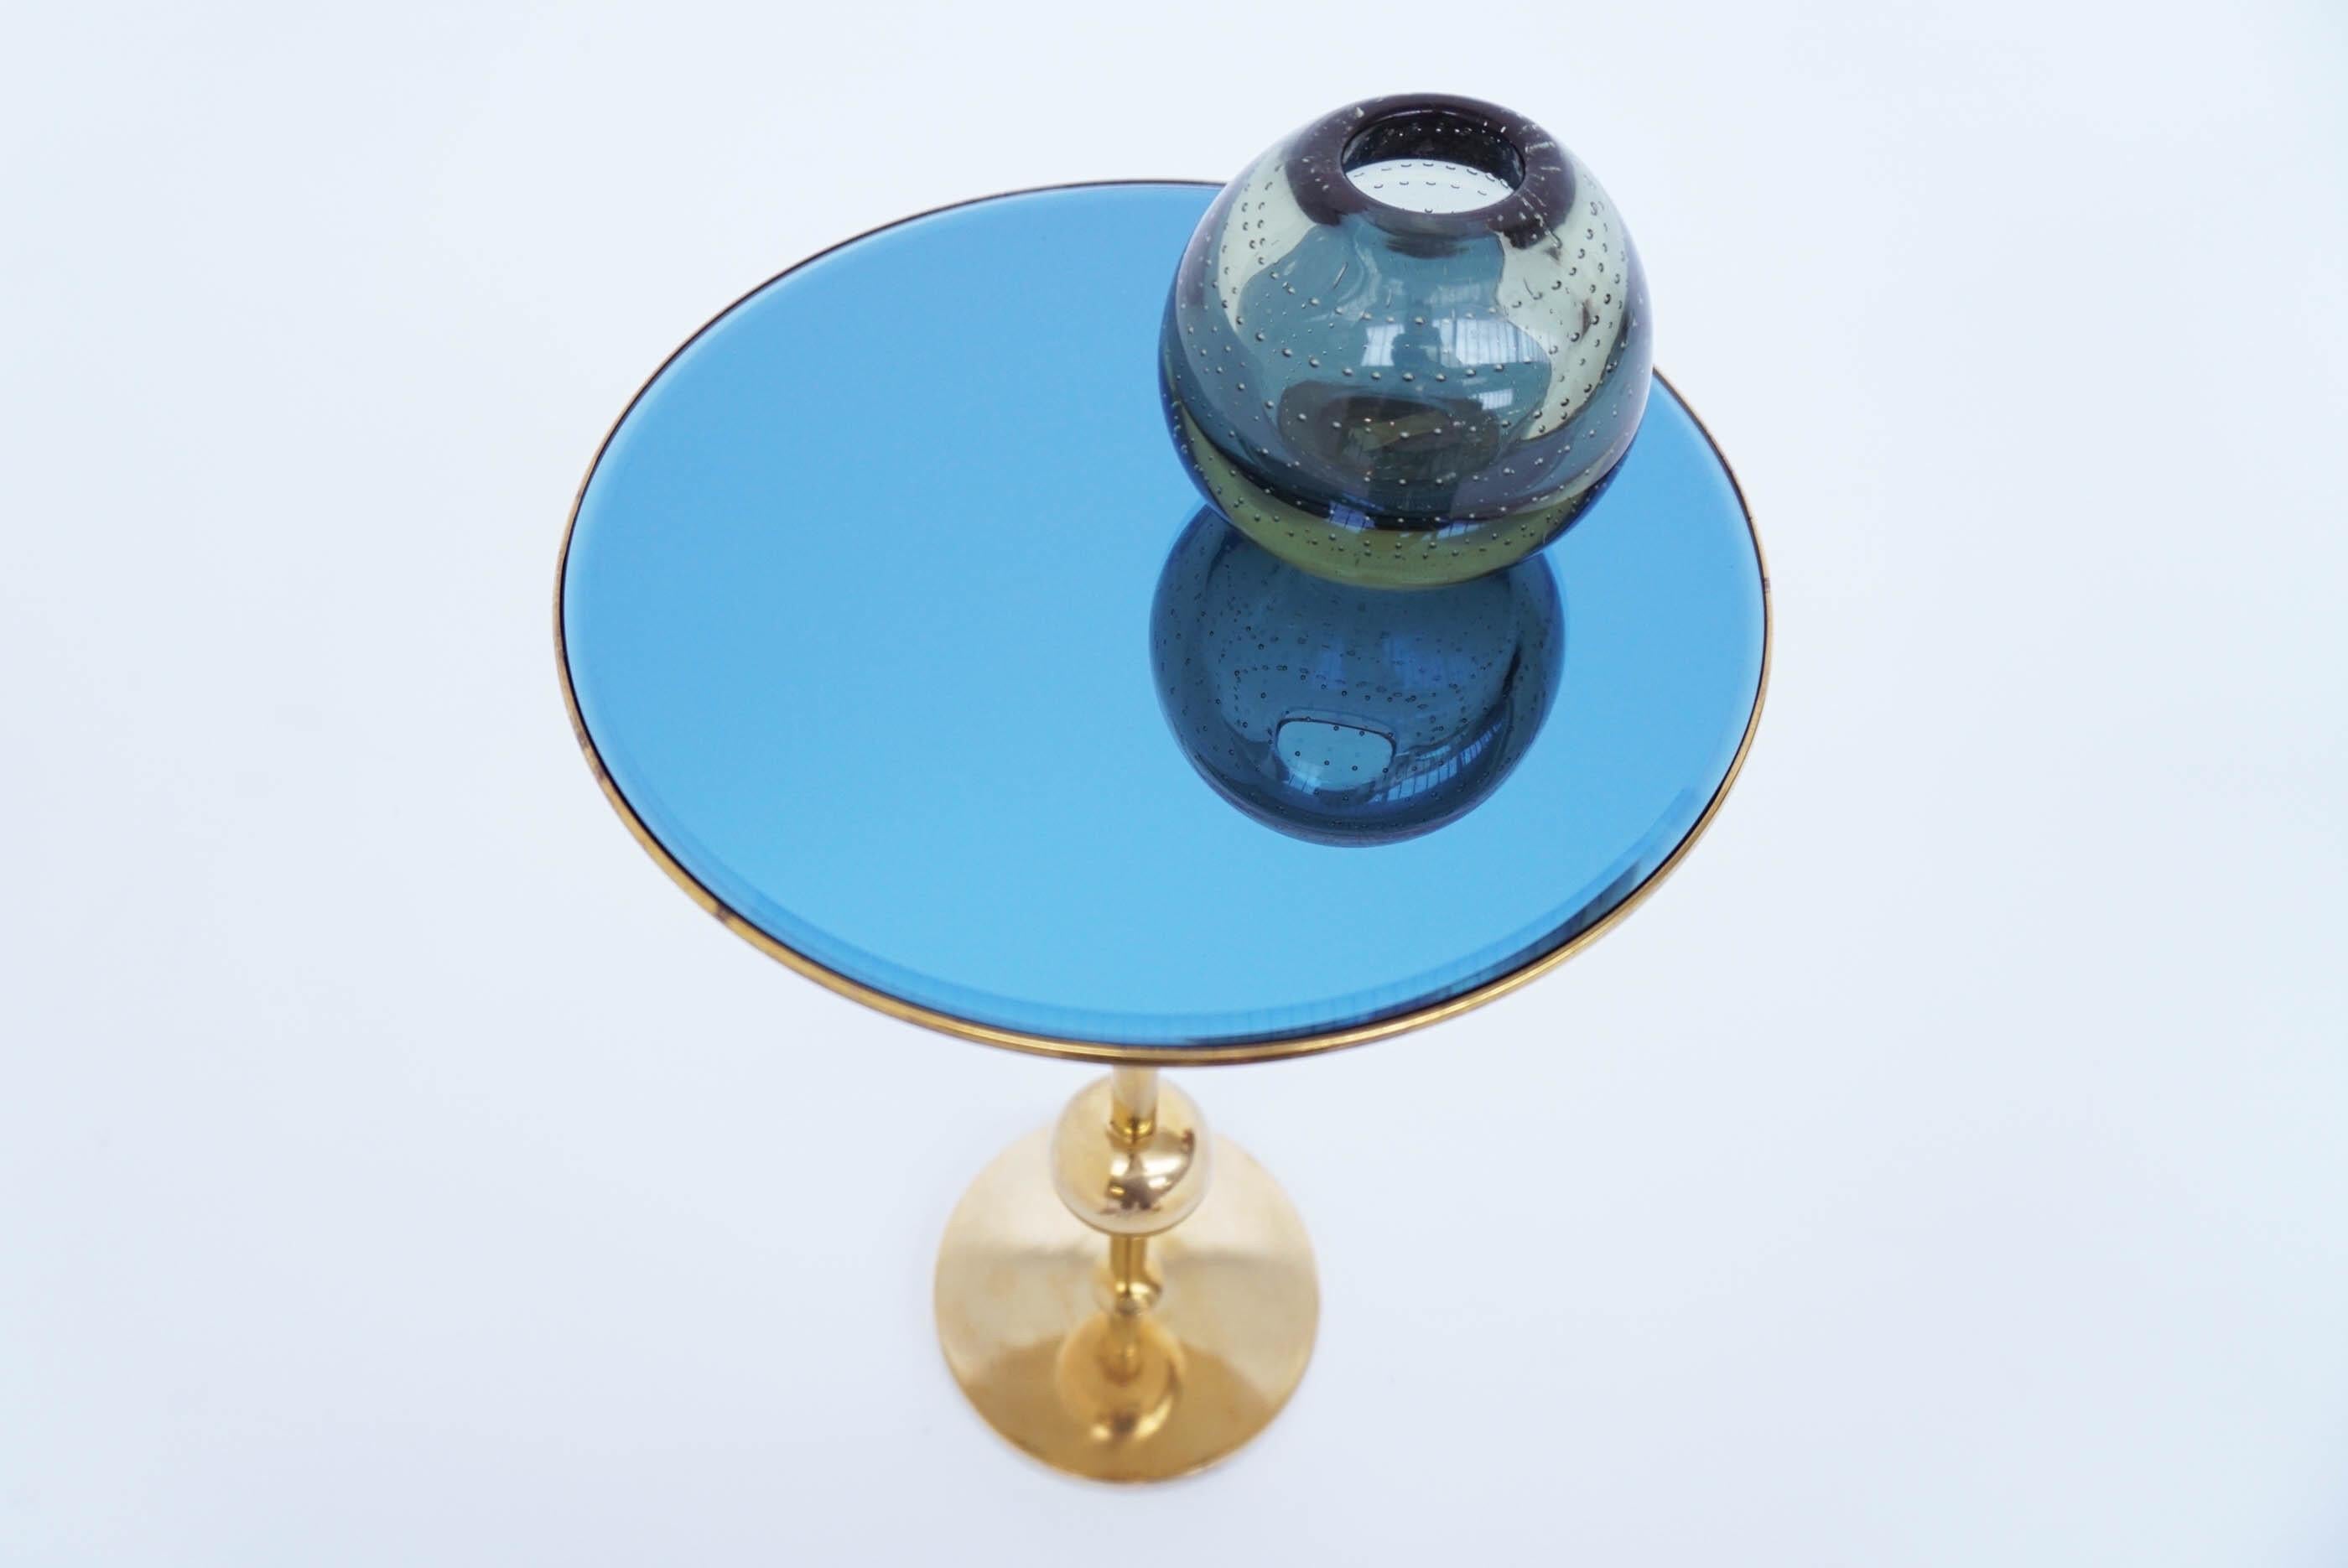 Italian Osvaldo Borsani T1 Side Table in Brass and Blu Mirrored Glass, Italy, 1950